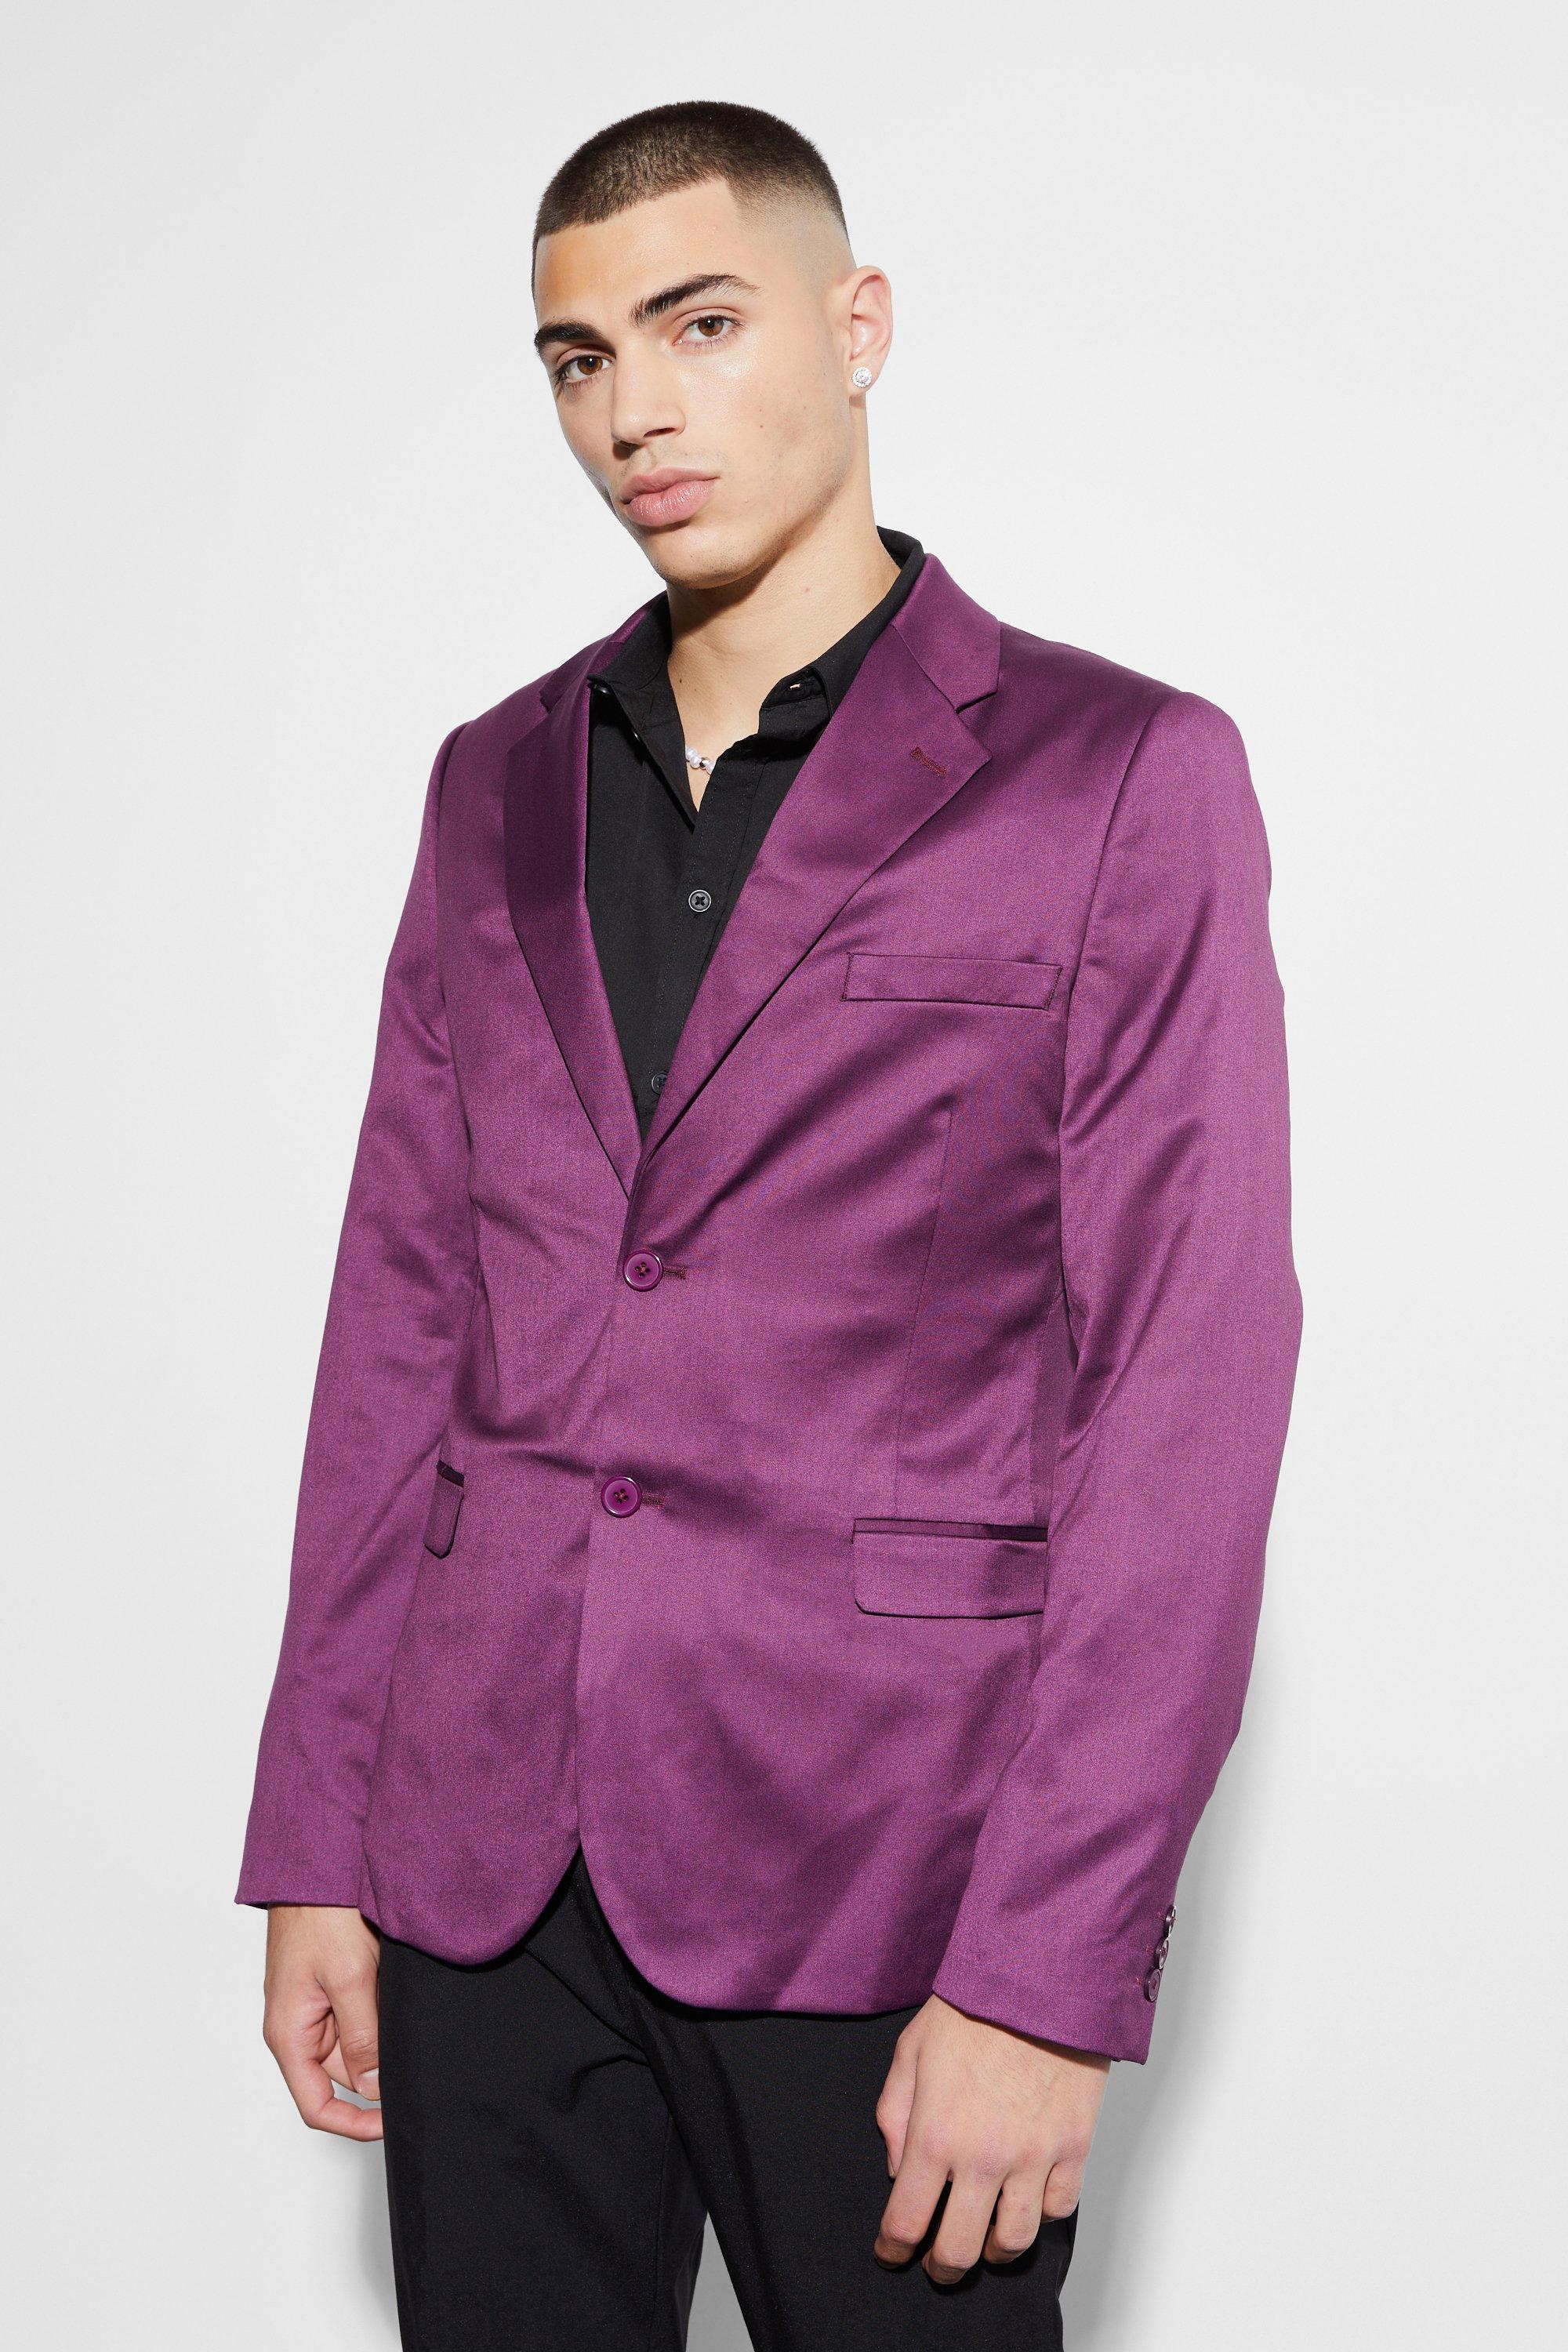 pantalon de costume skinny satiné homme - violet - 38, violet